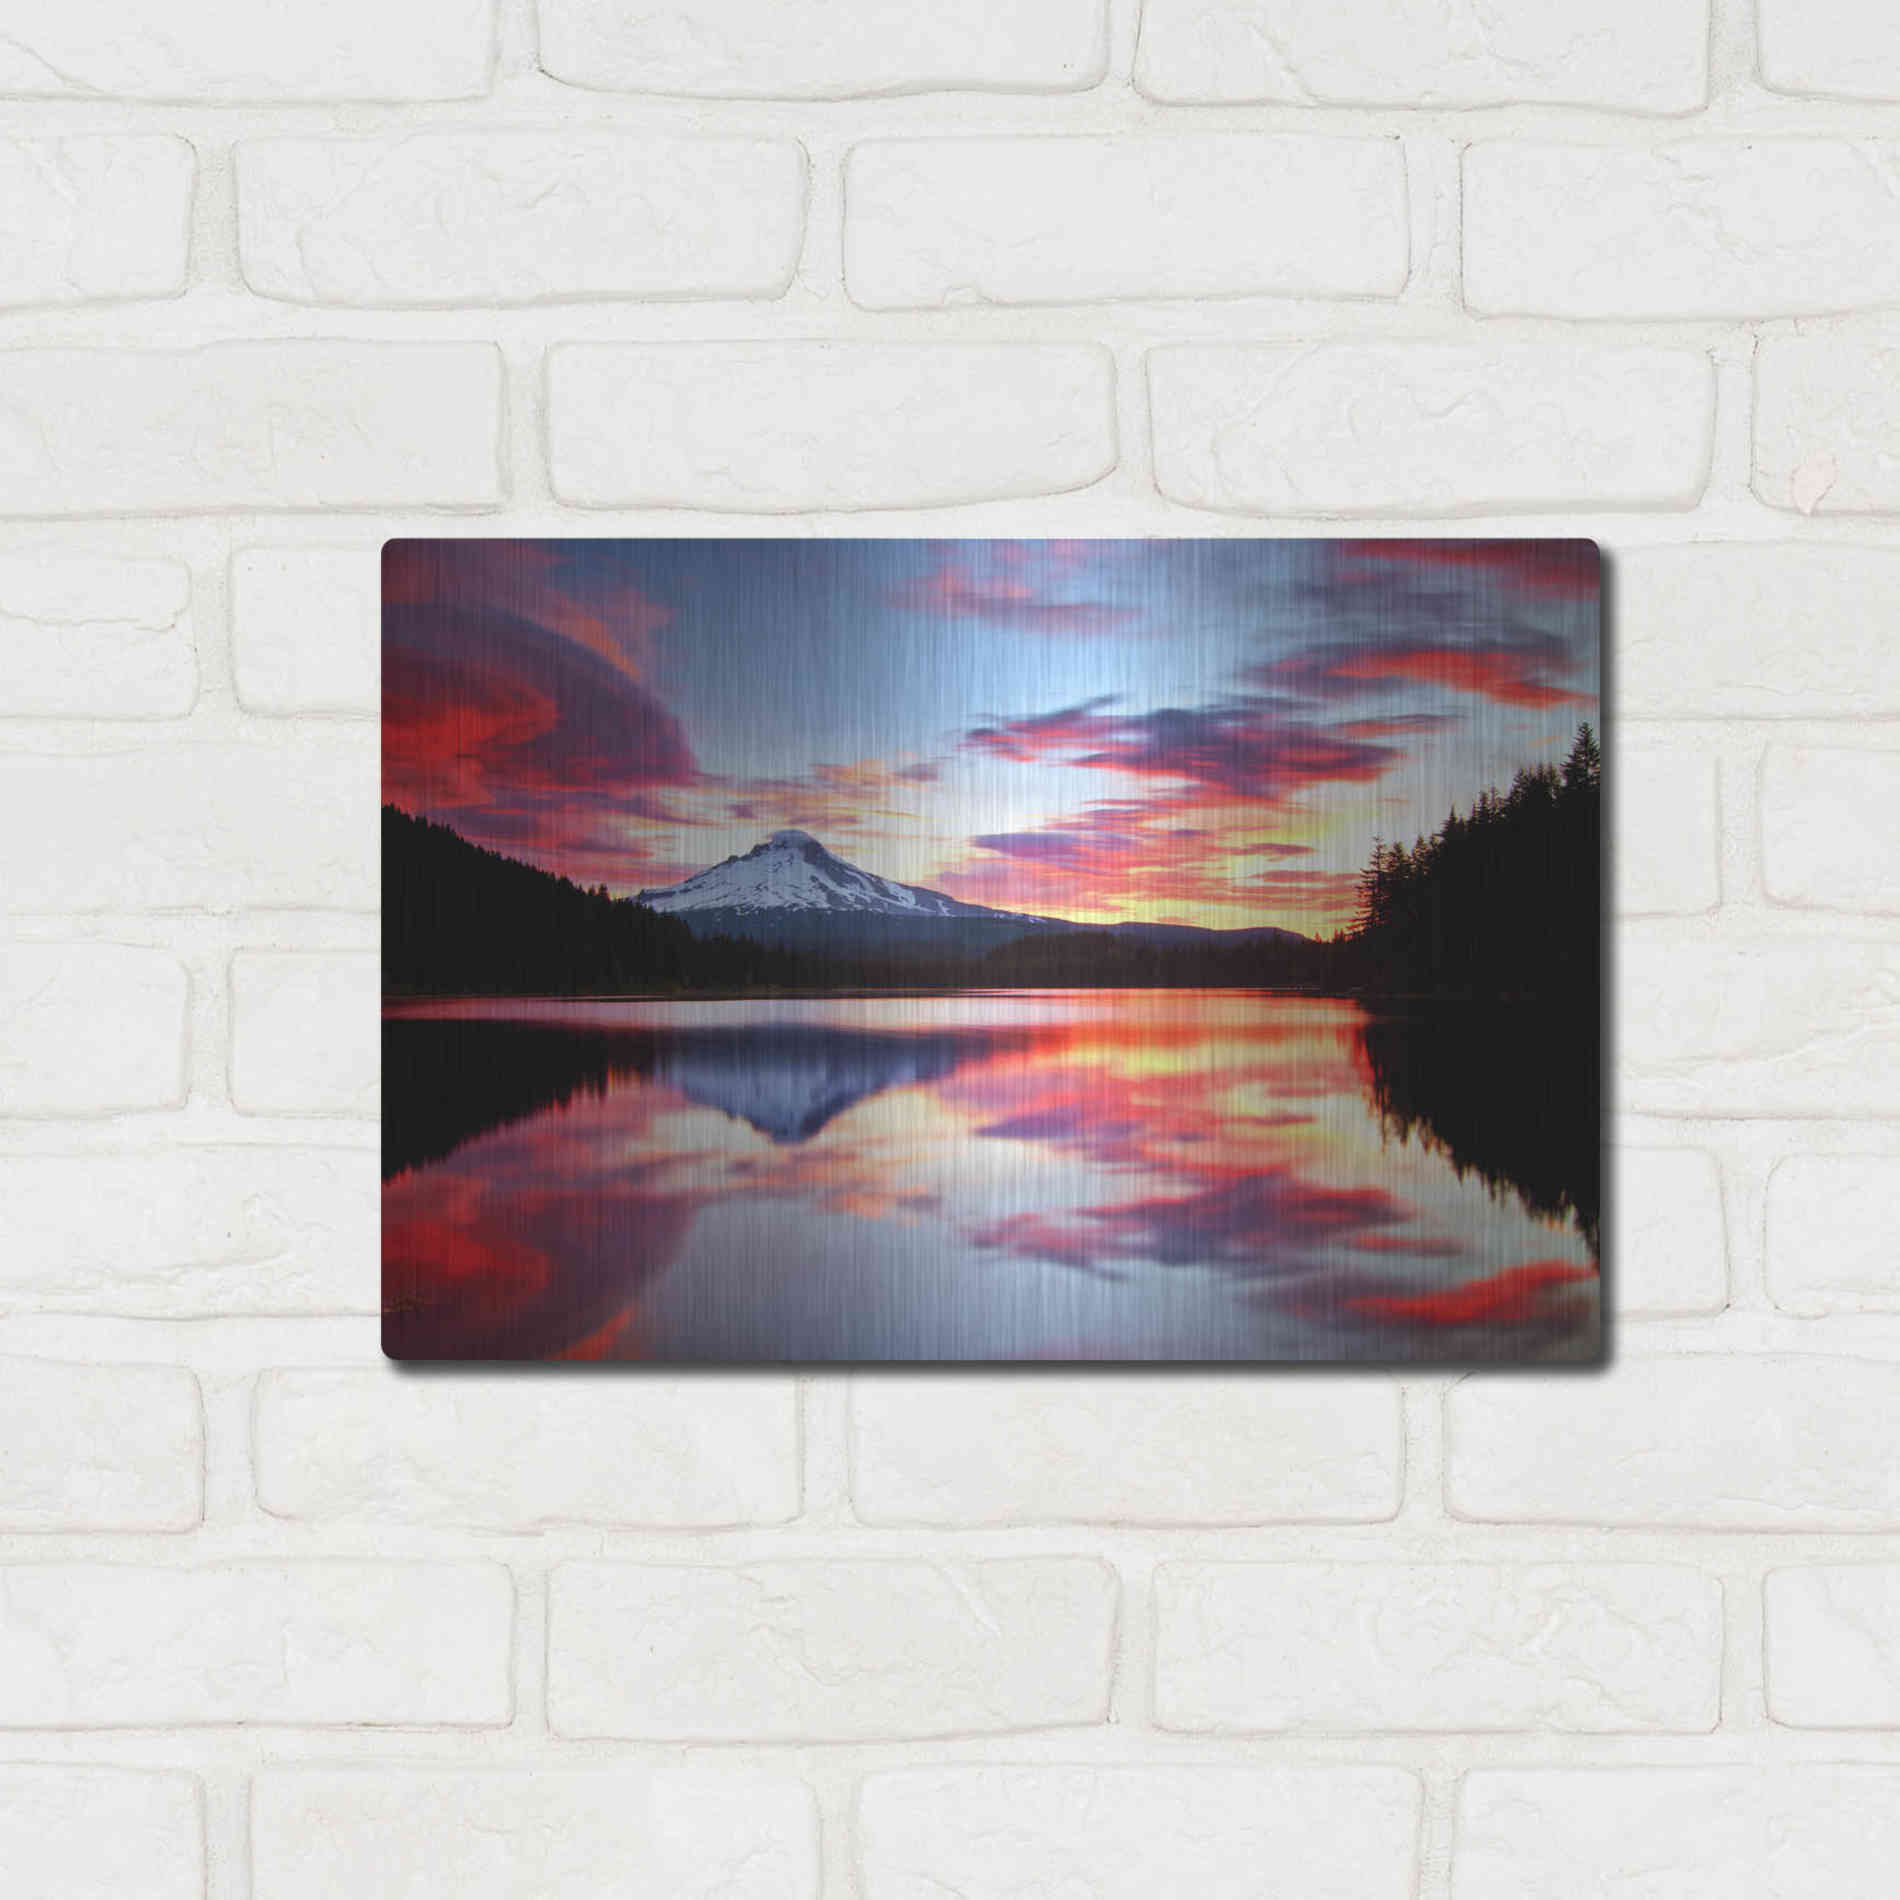 Luxe Metal Art 'Sunrise on the Lake' by Darren White, Metal Wall Art,16x12